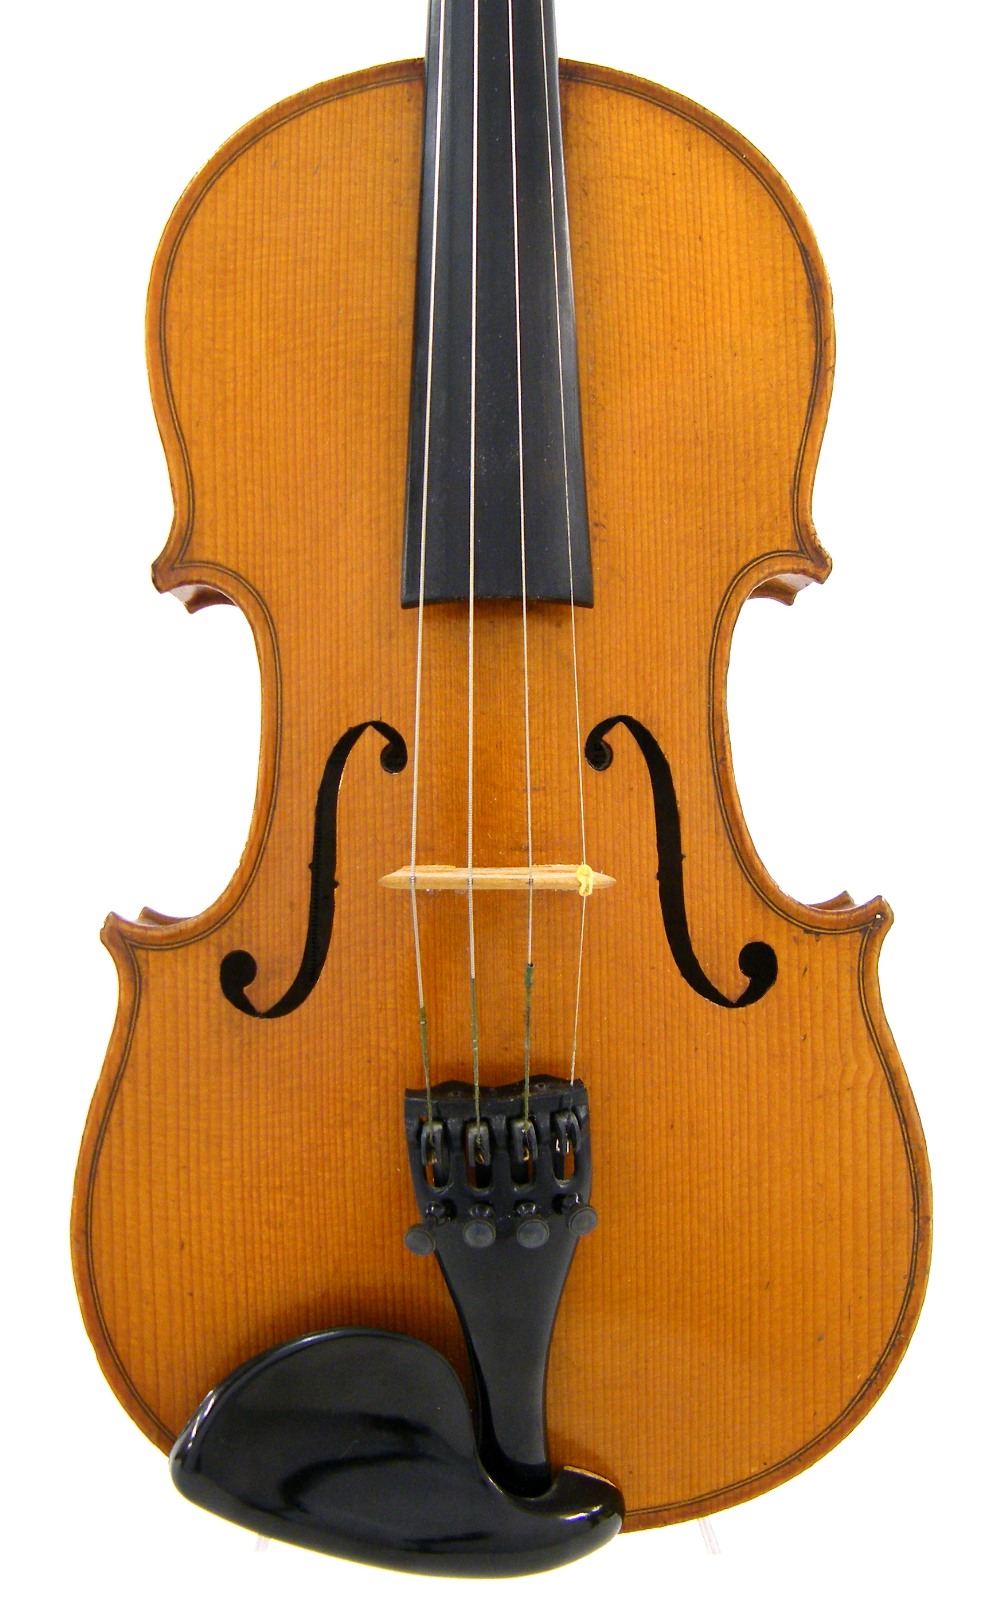 French violin labelled L. Berard Annee 1927, 14", 35.60cm